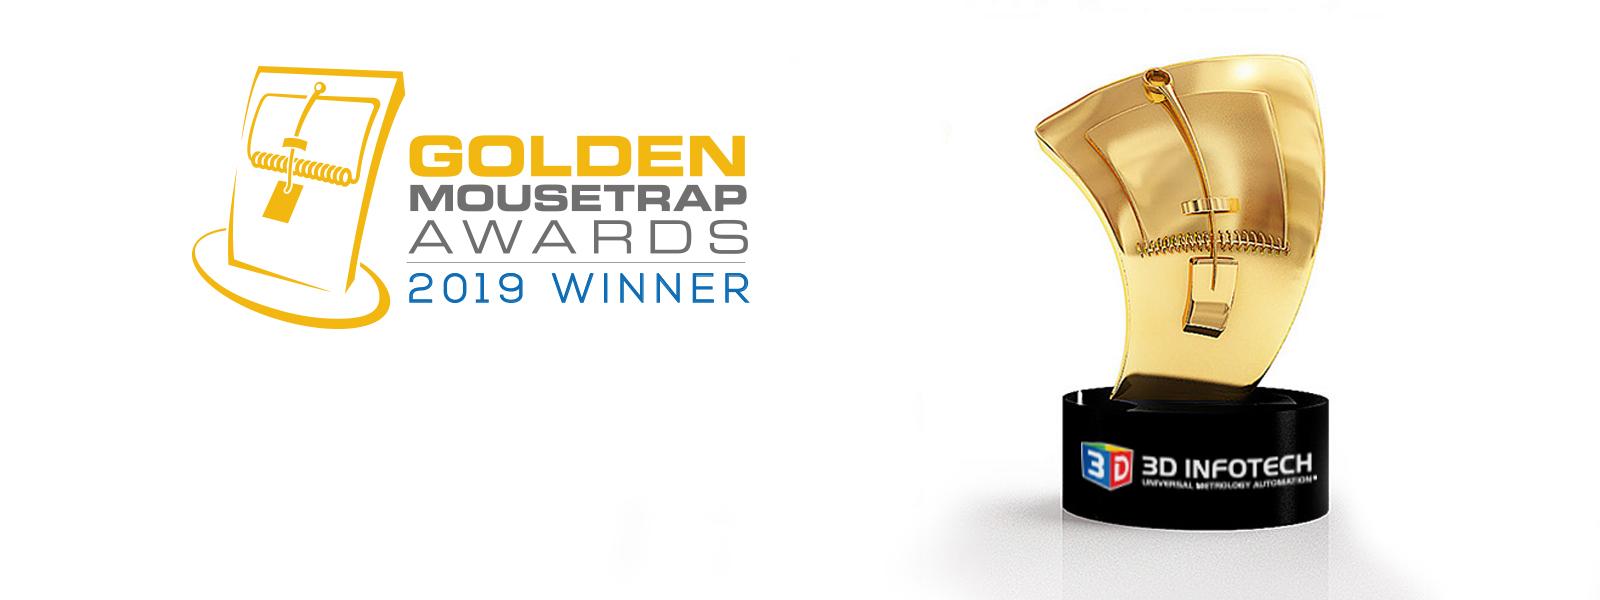 Spotlight AR++ Golden Mousetrap Awards